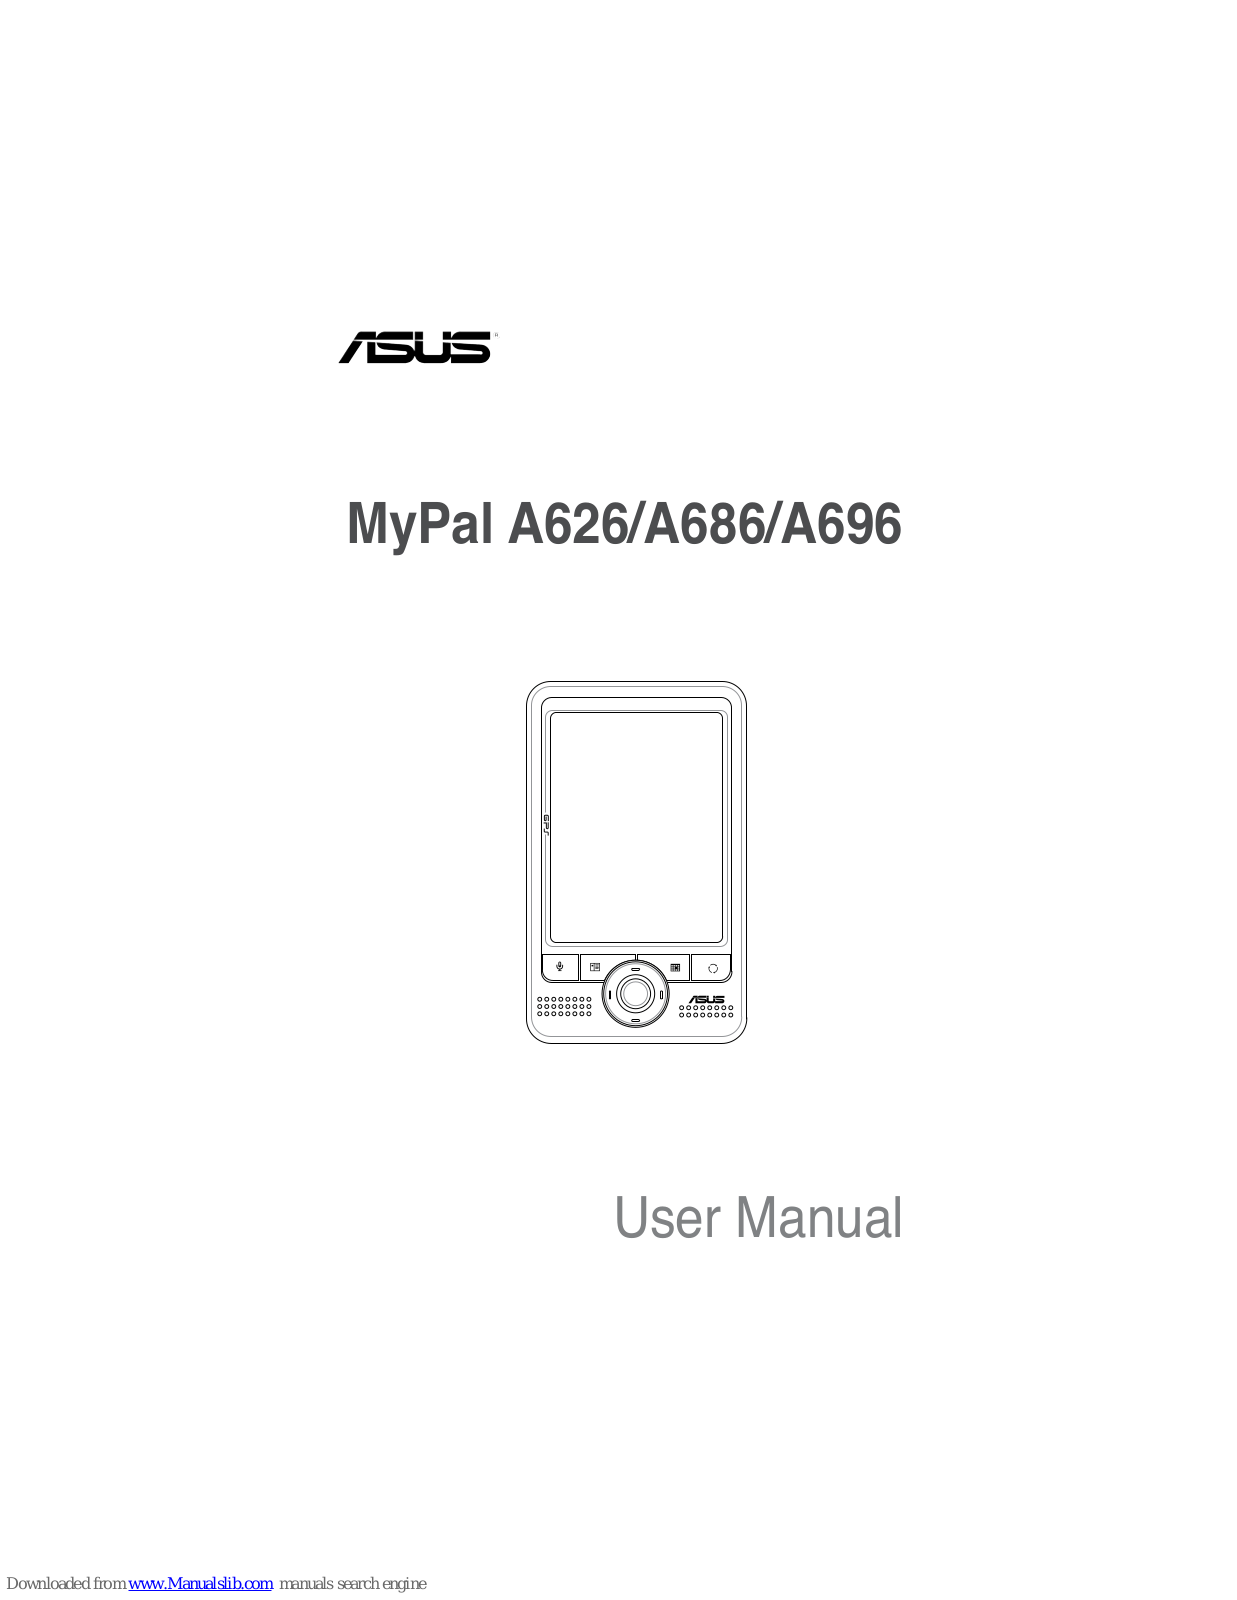 Asus MyPal A626, MyPal A686, MyPal A696 User Manual